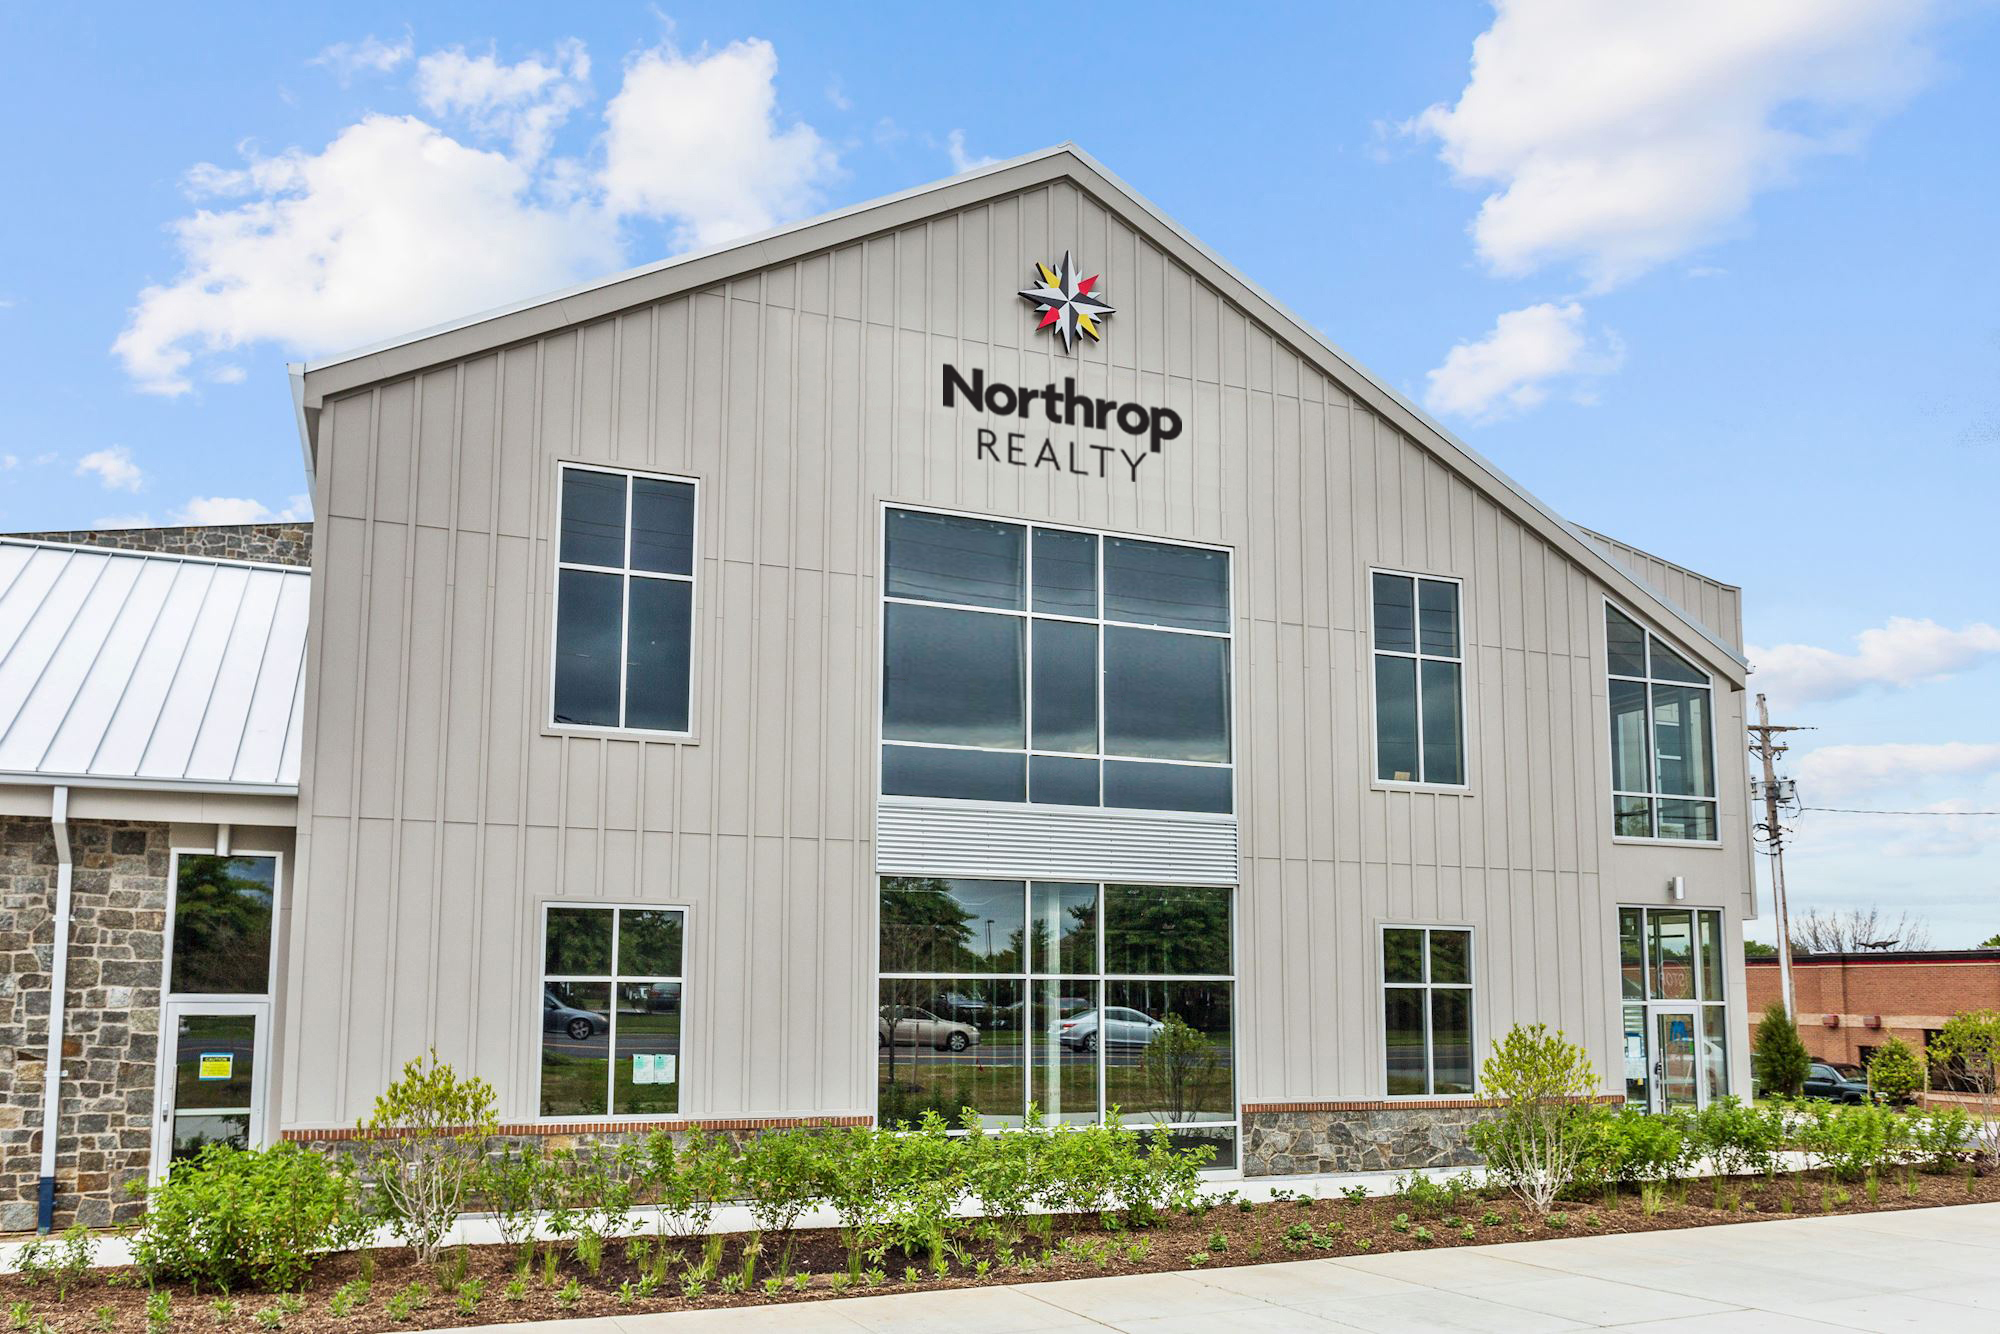 Northrop Realty Headquarters